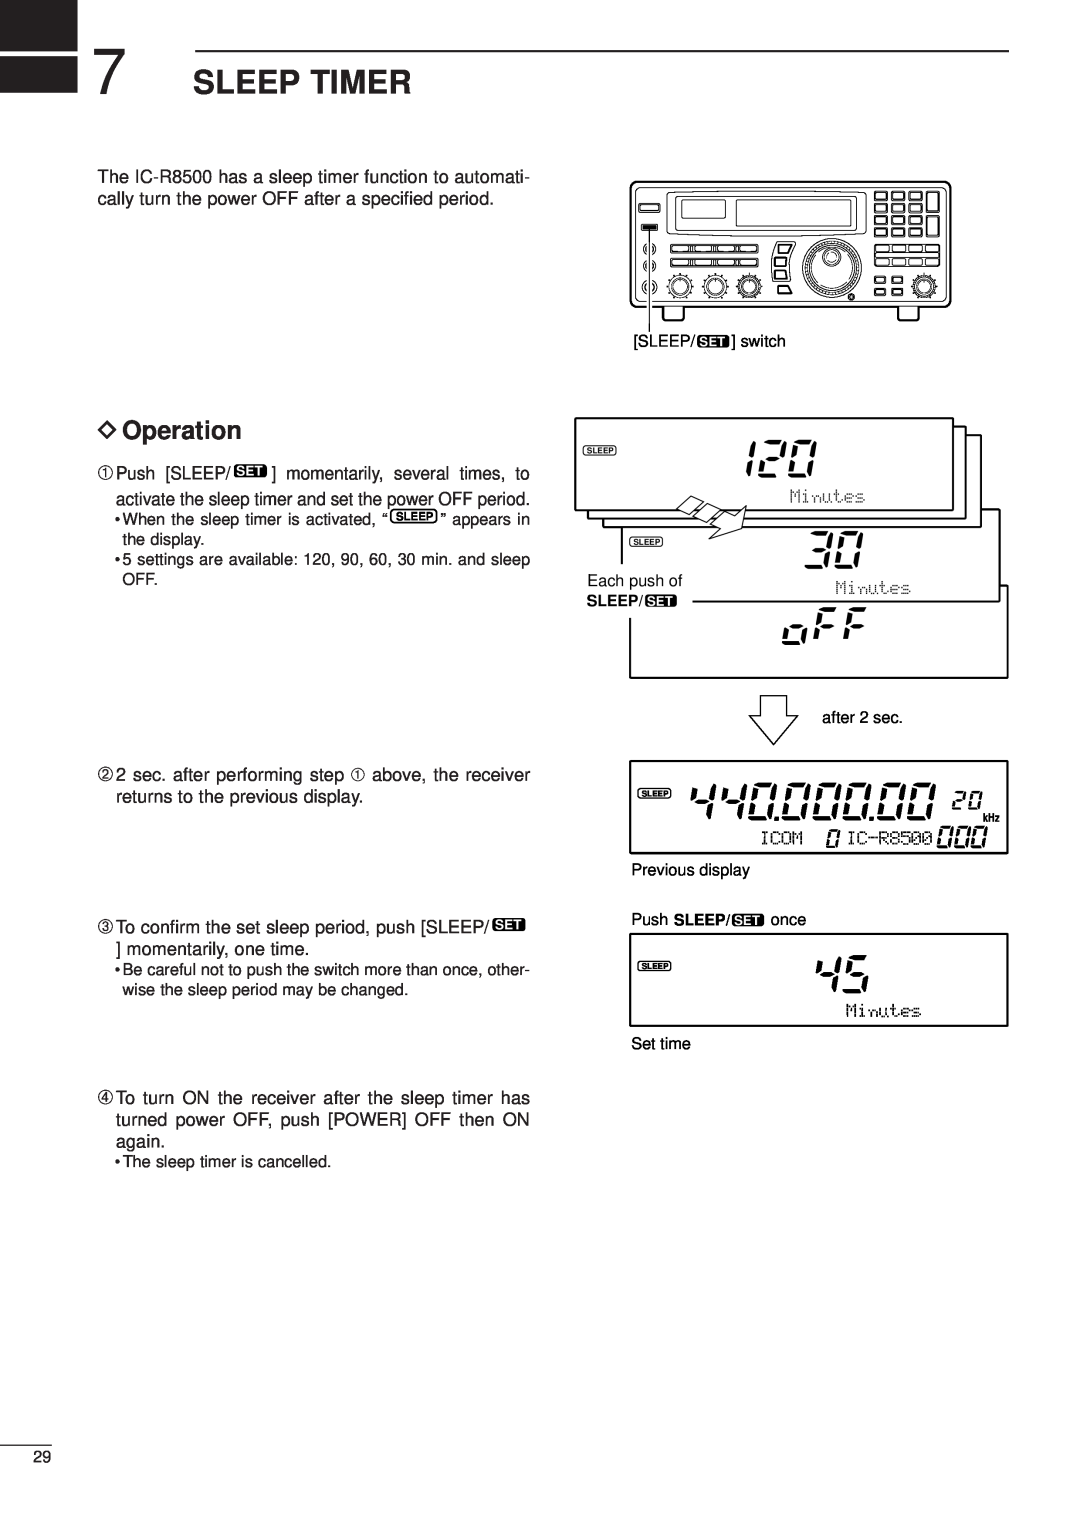 Icom IC-R8500 instruction manual Sleep Timer, D Operation 